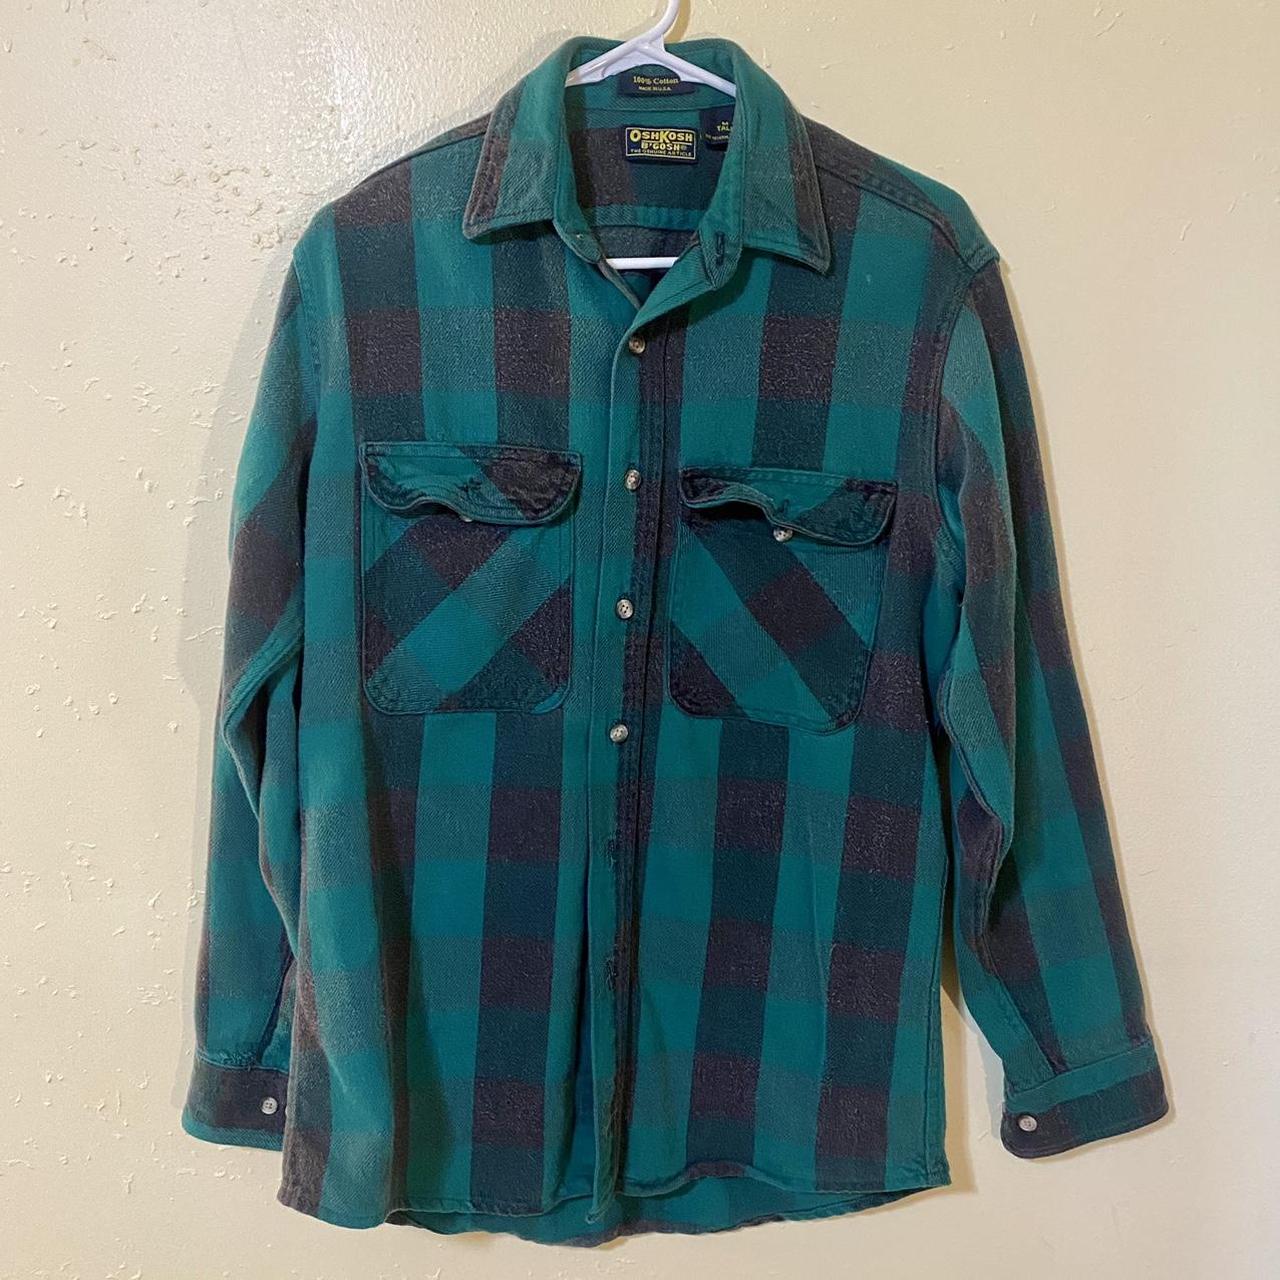 Vintage Osh Kosh Flannel Shirt 90's Quilted Green Black Plaid